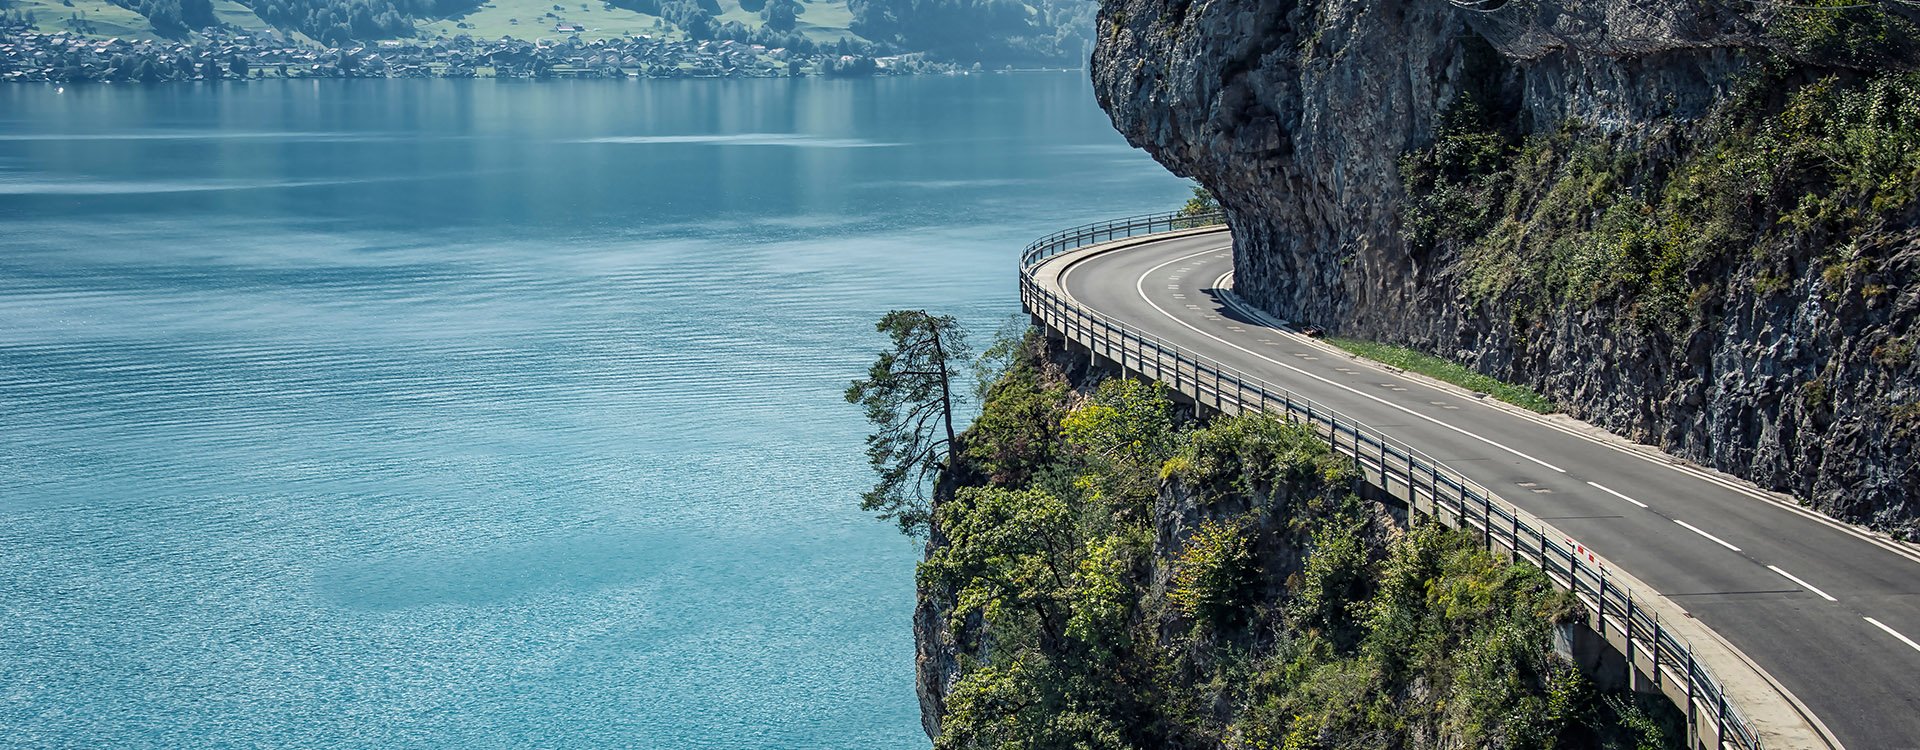 Road built in the cliff in Switzerland